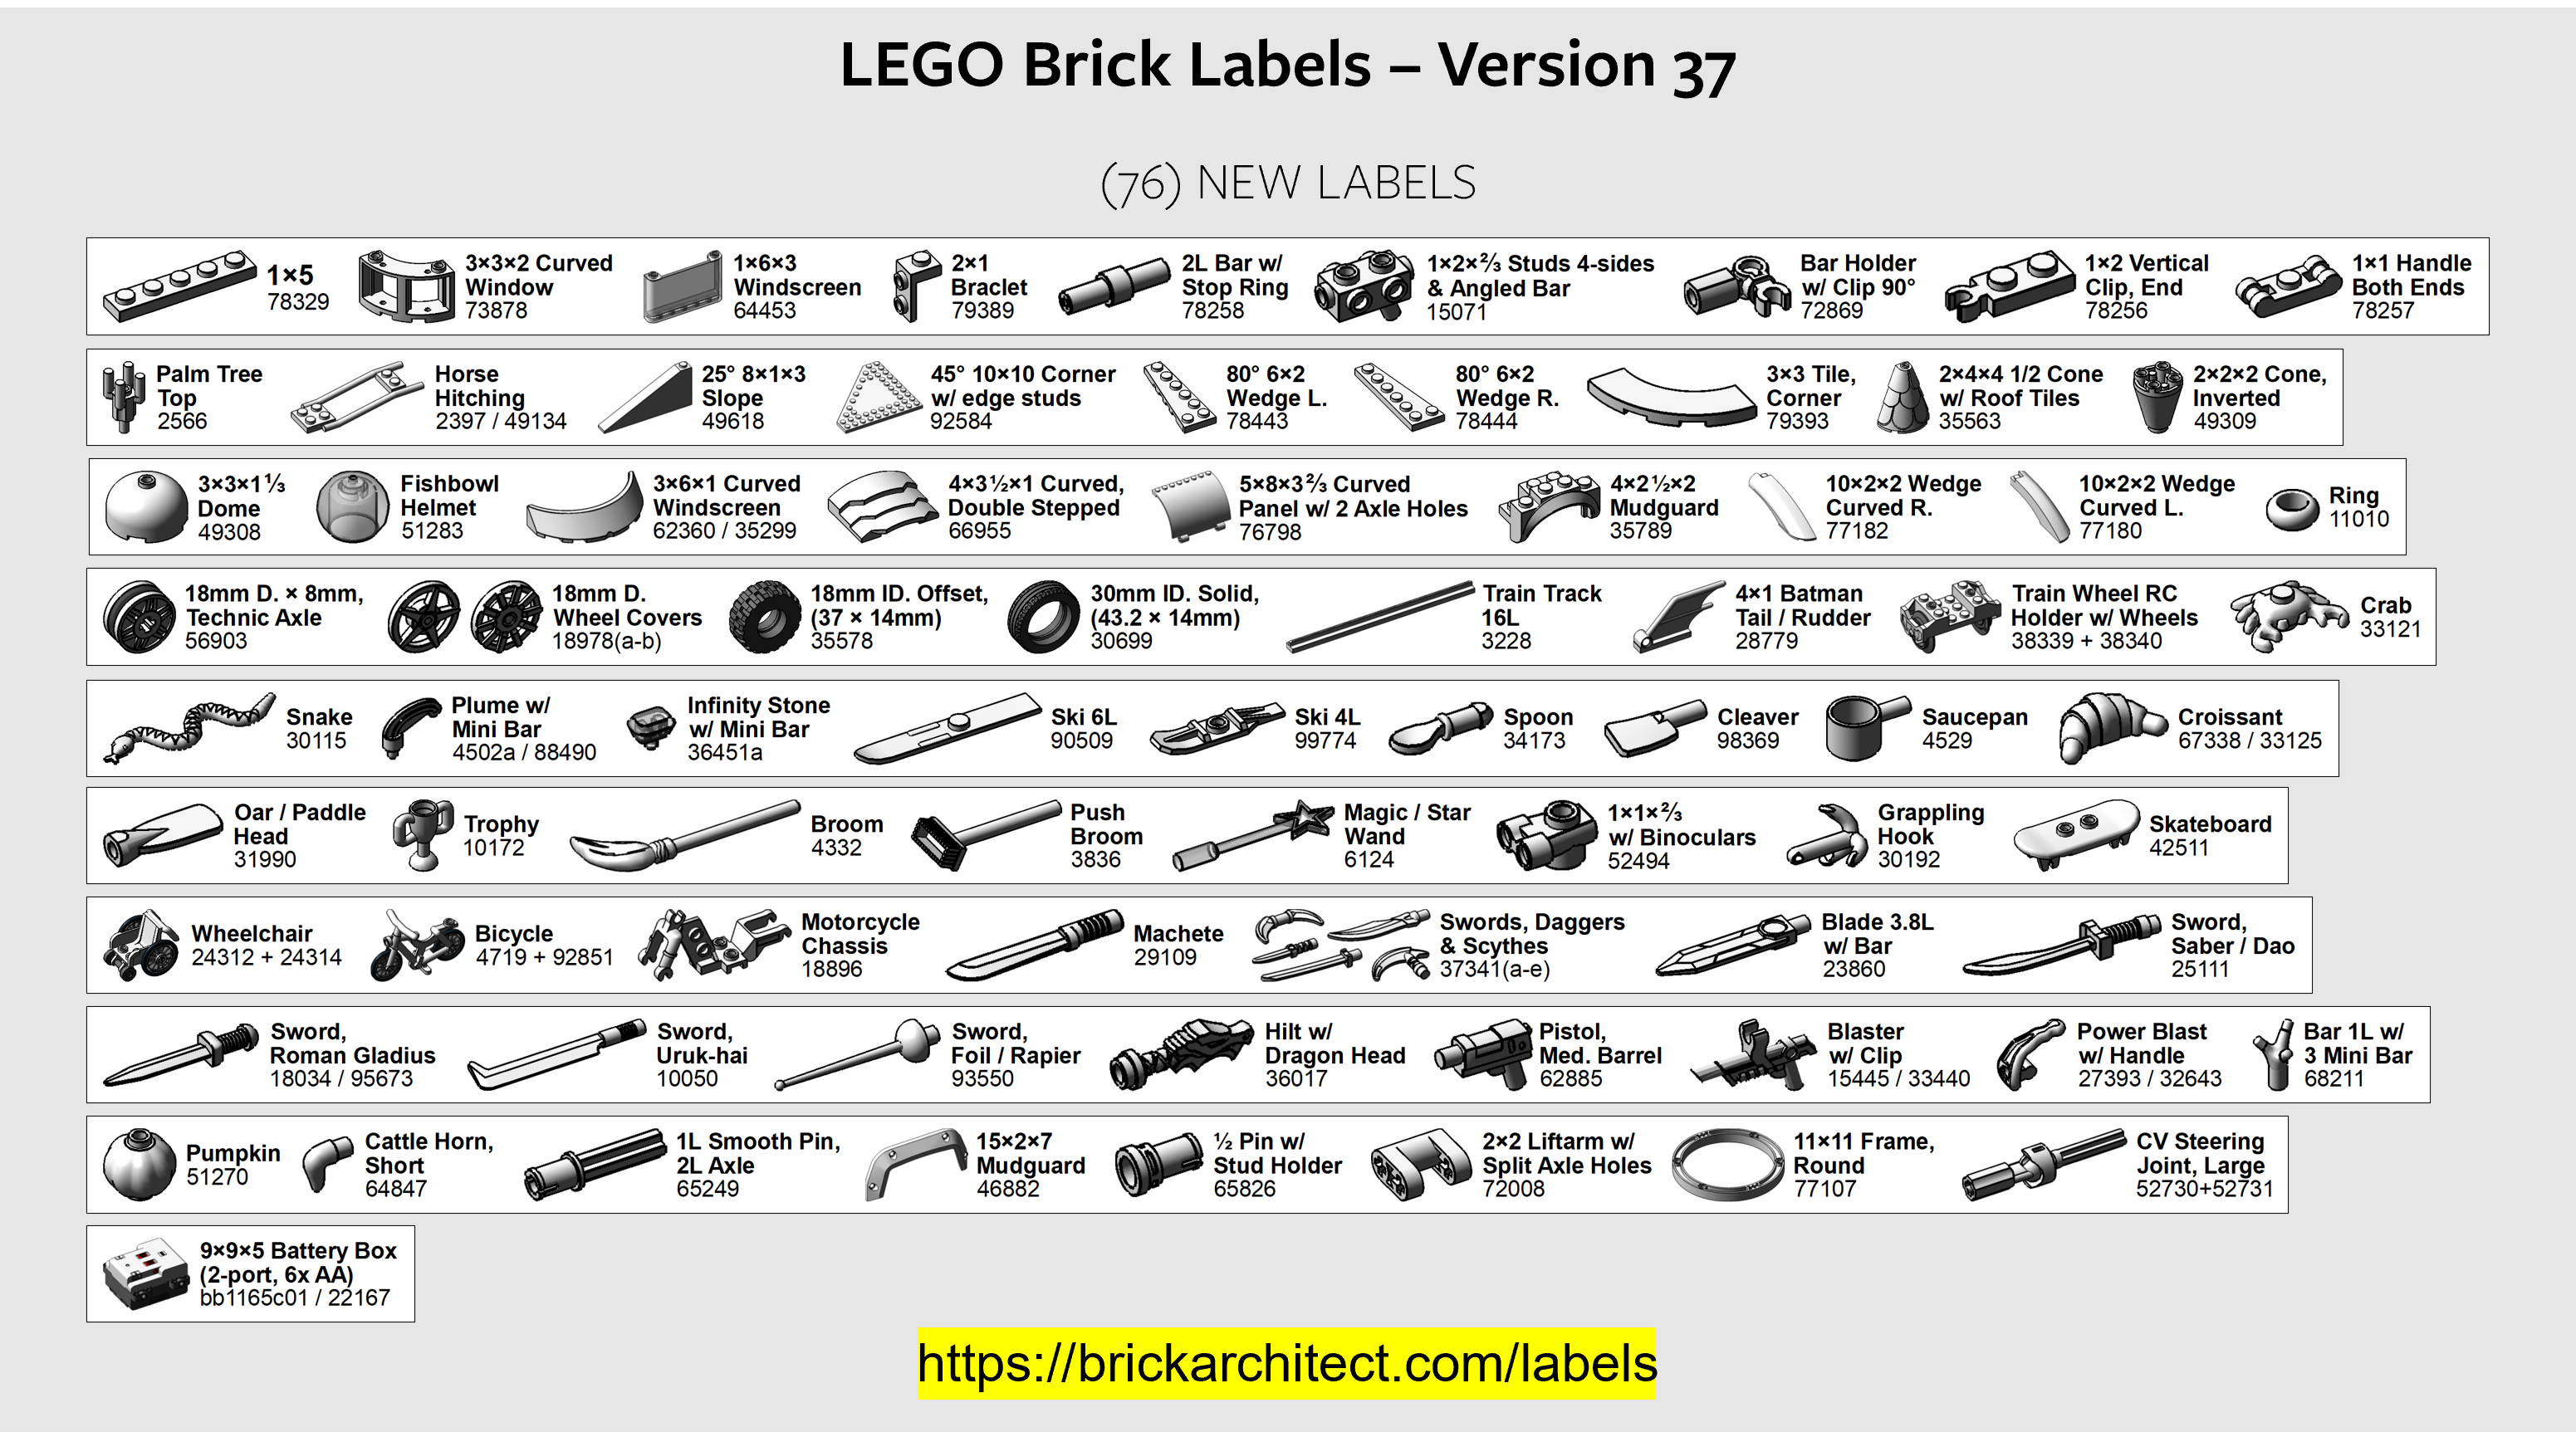 global botanist fornærme History of LEGO Brick Labels - BRICK ARCHITECT